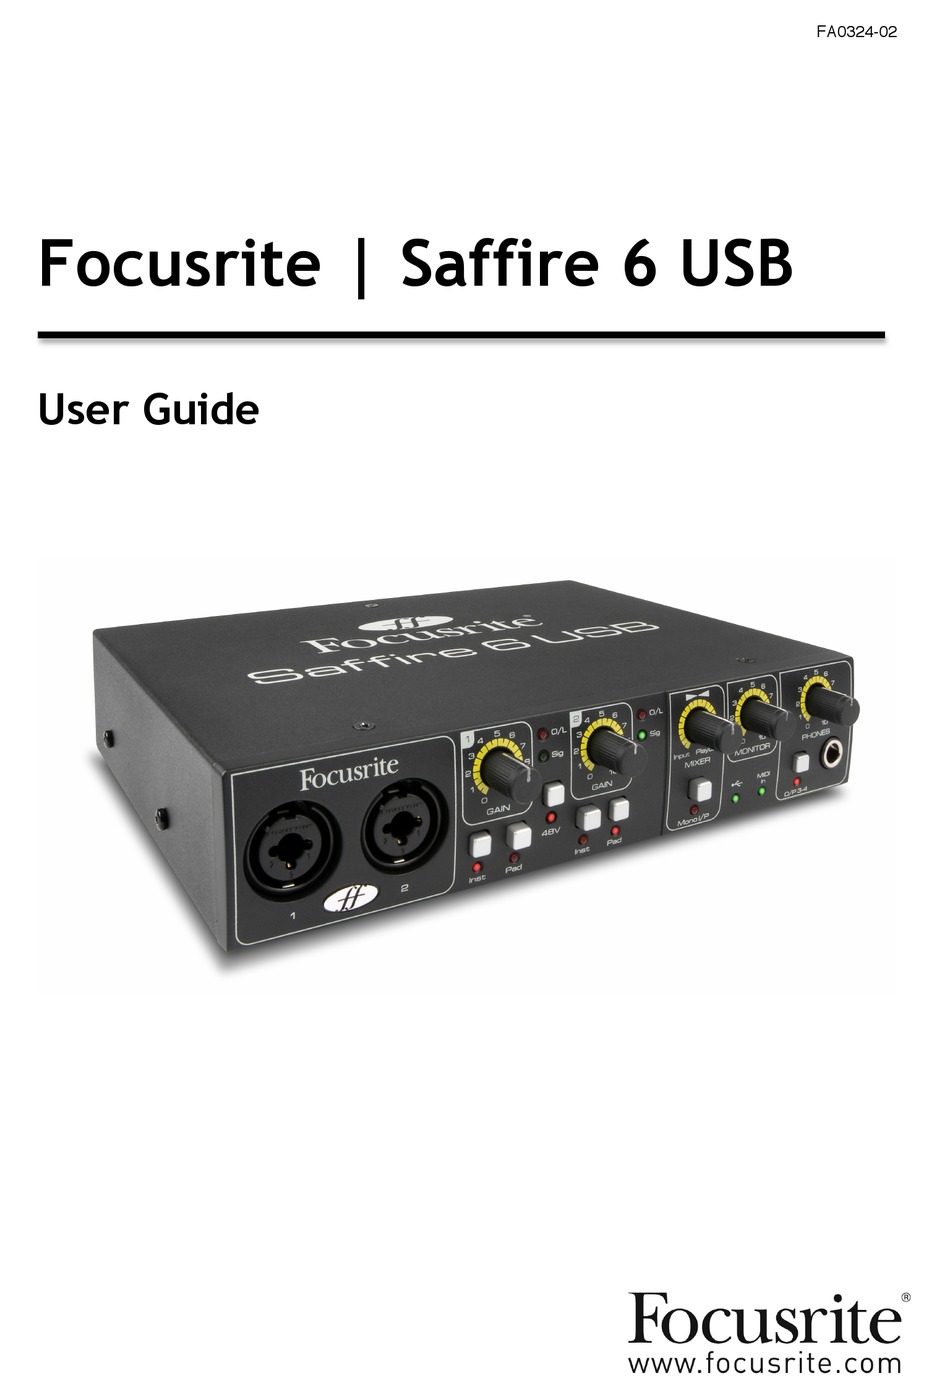 FOCUSRITE SAFFIRE 6 USB USER MANUAL Pdf Download | ManualsLib